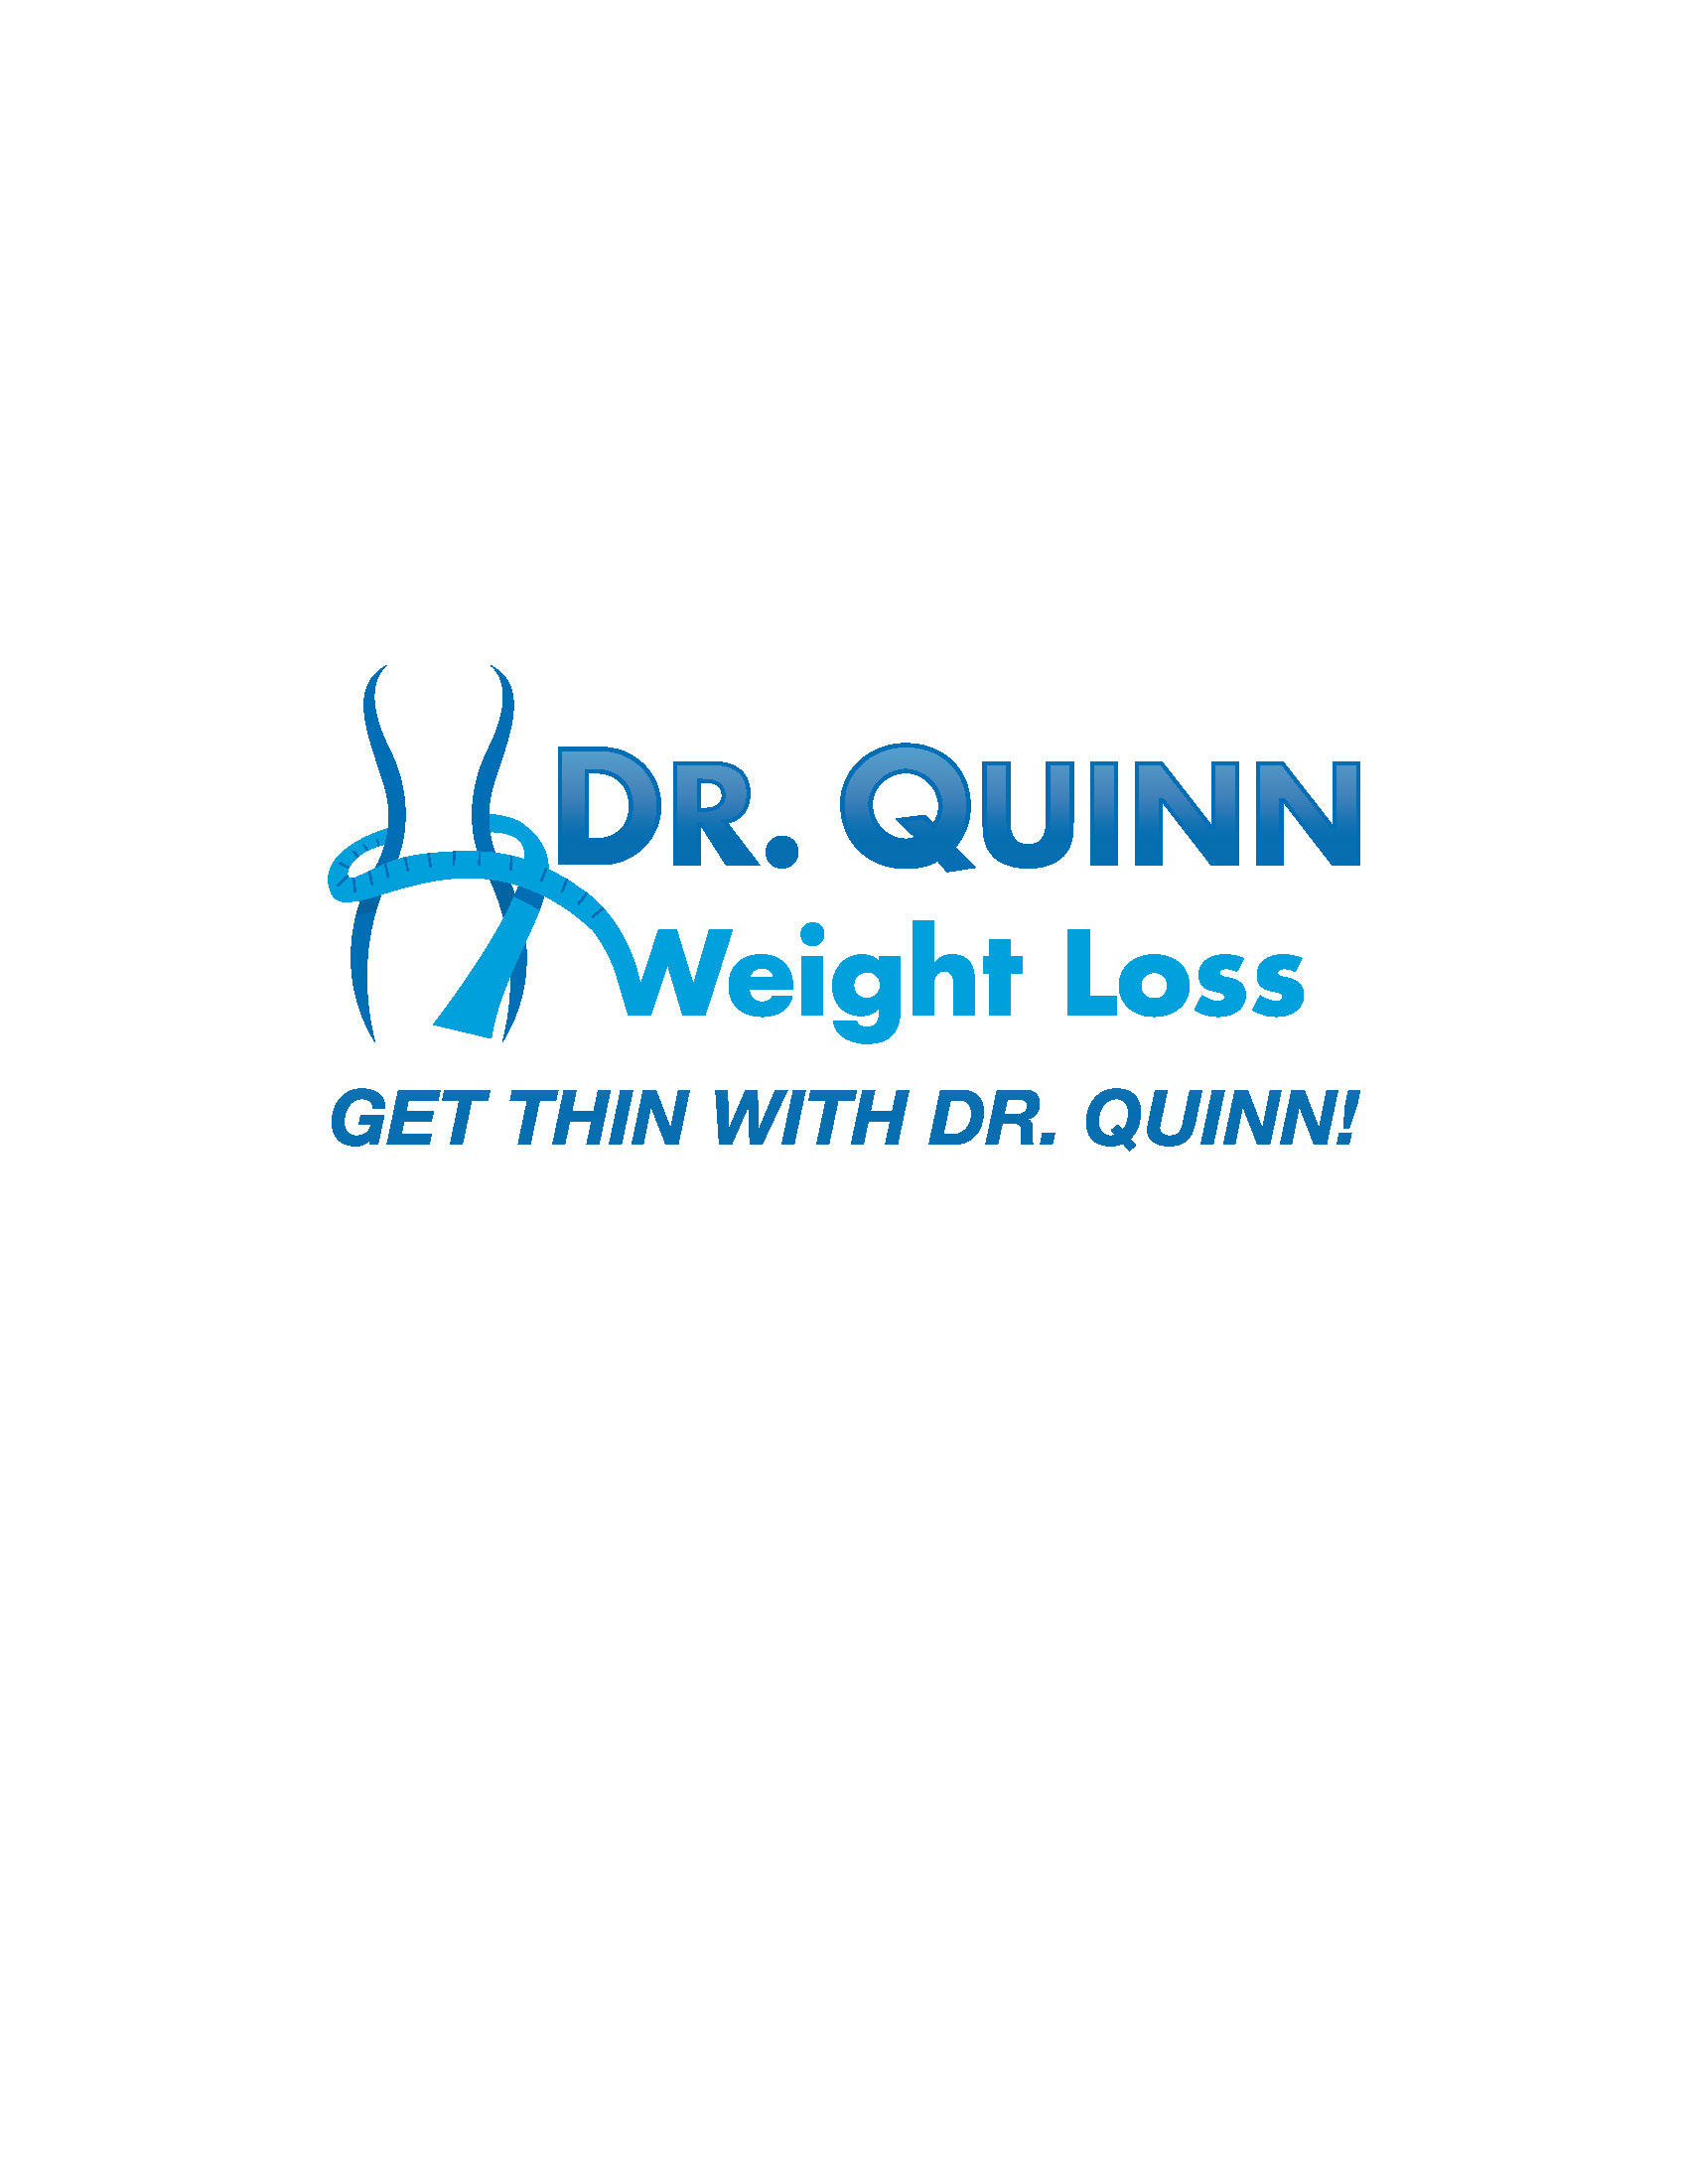 Dr. Quinn Weight Loss Photo